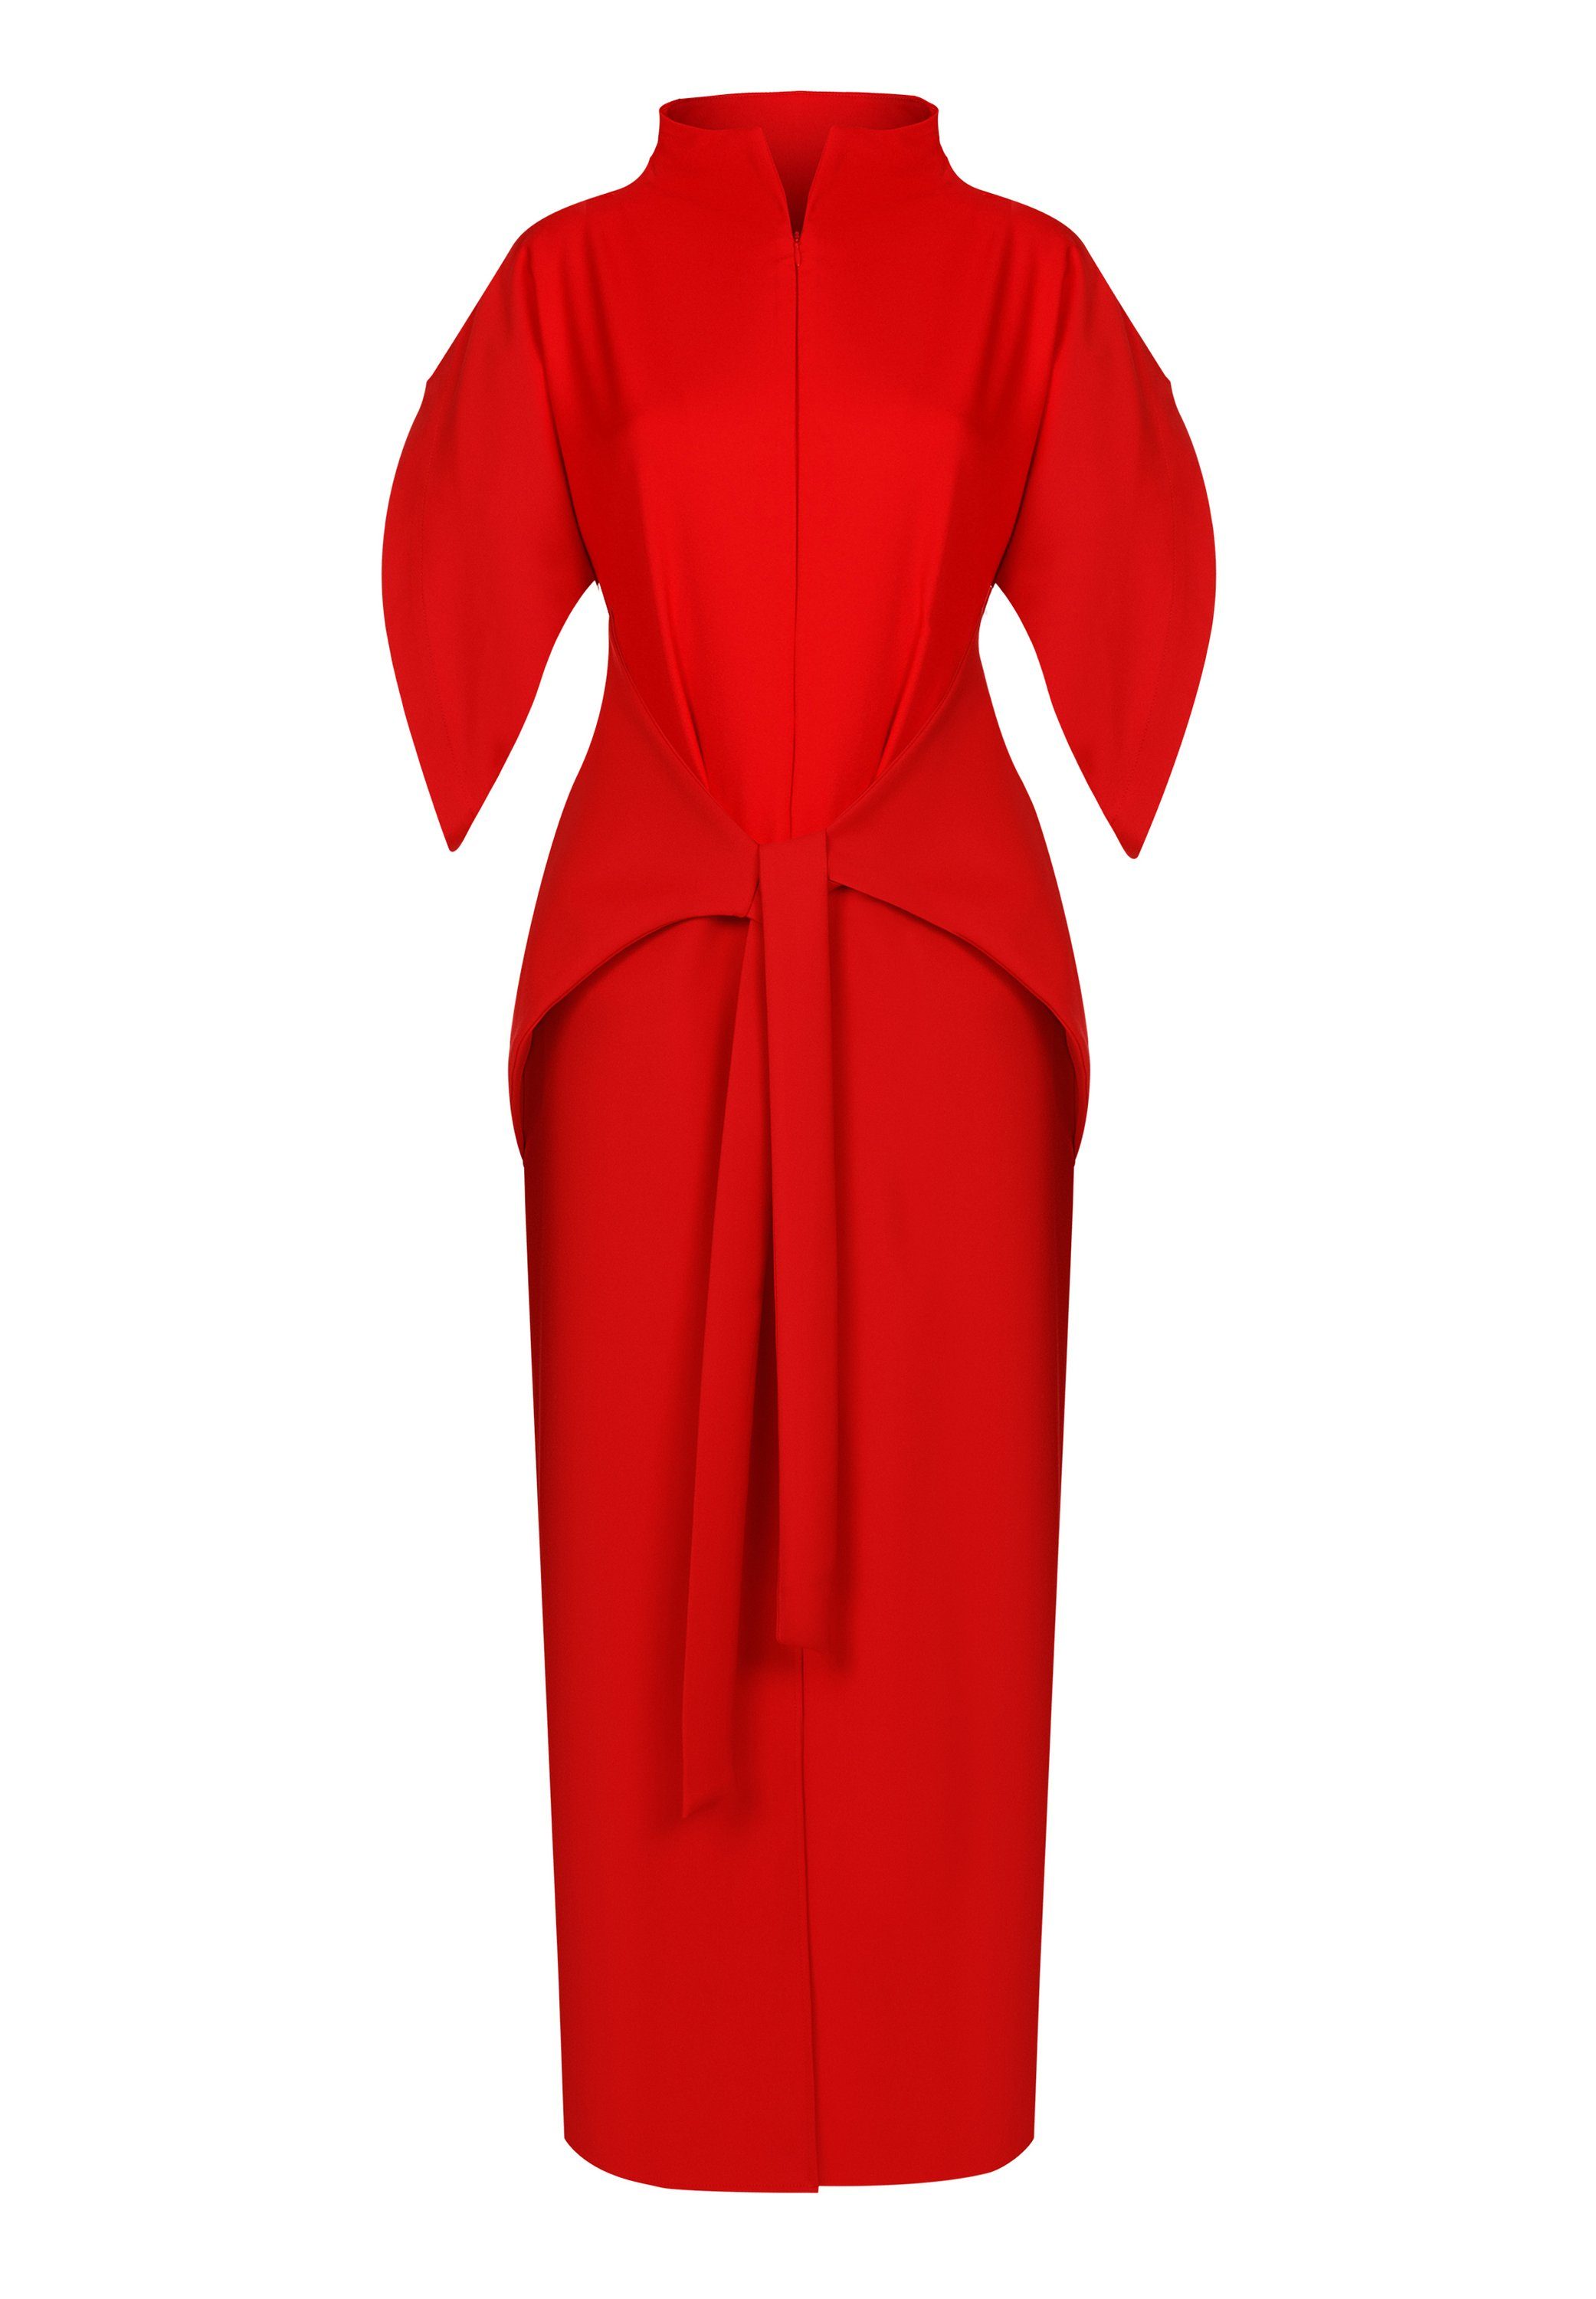 NARROW Lea RED Cocktailkleid dress Monosuit